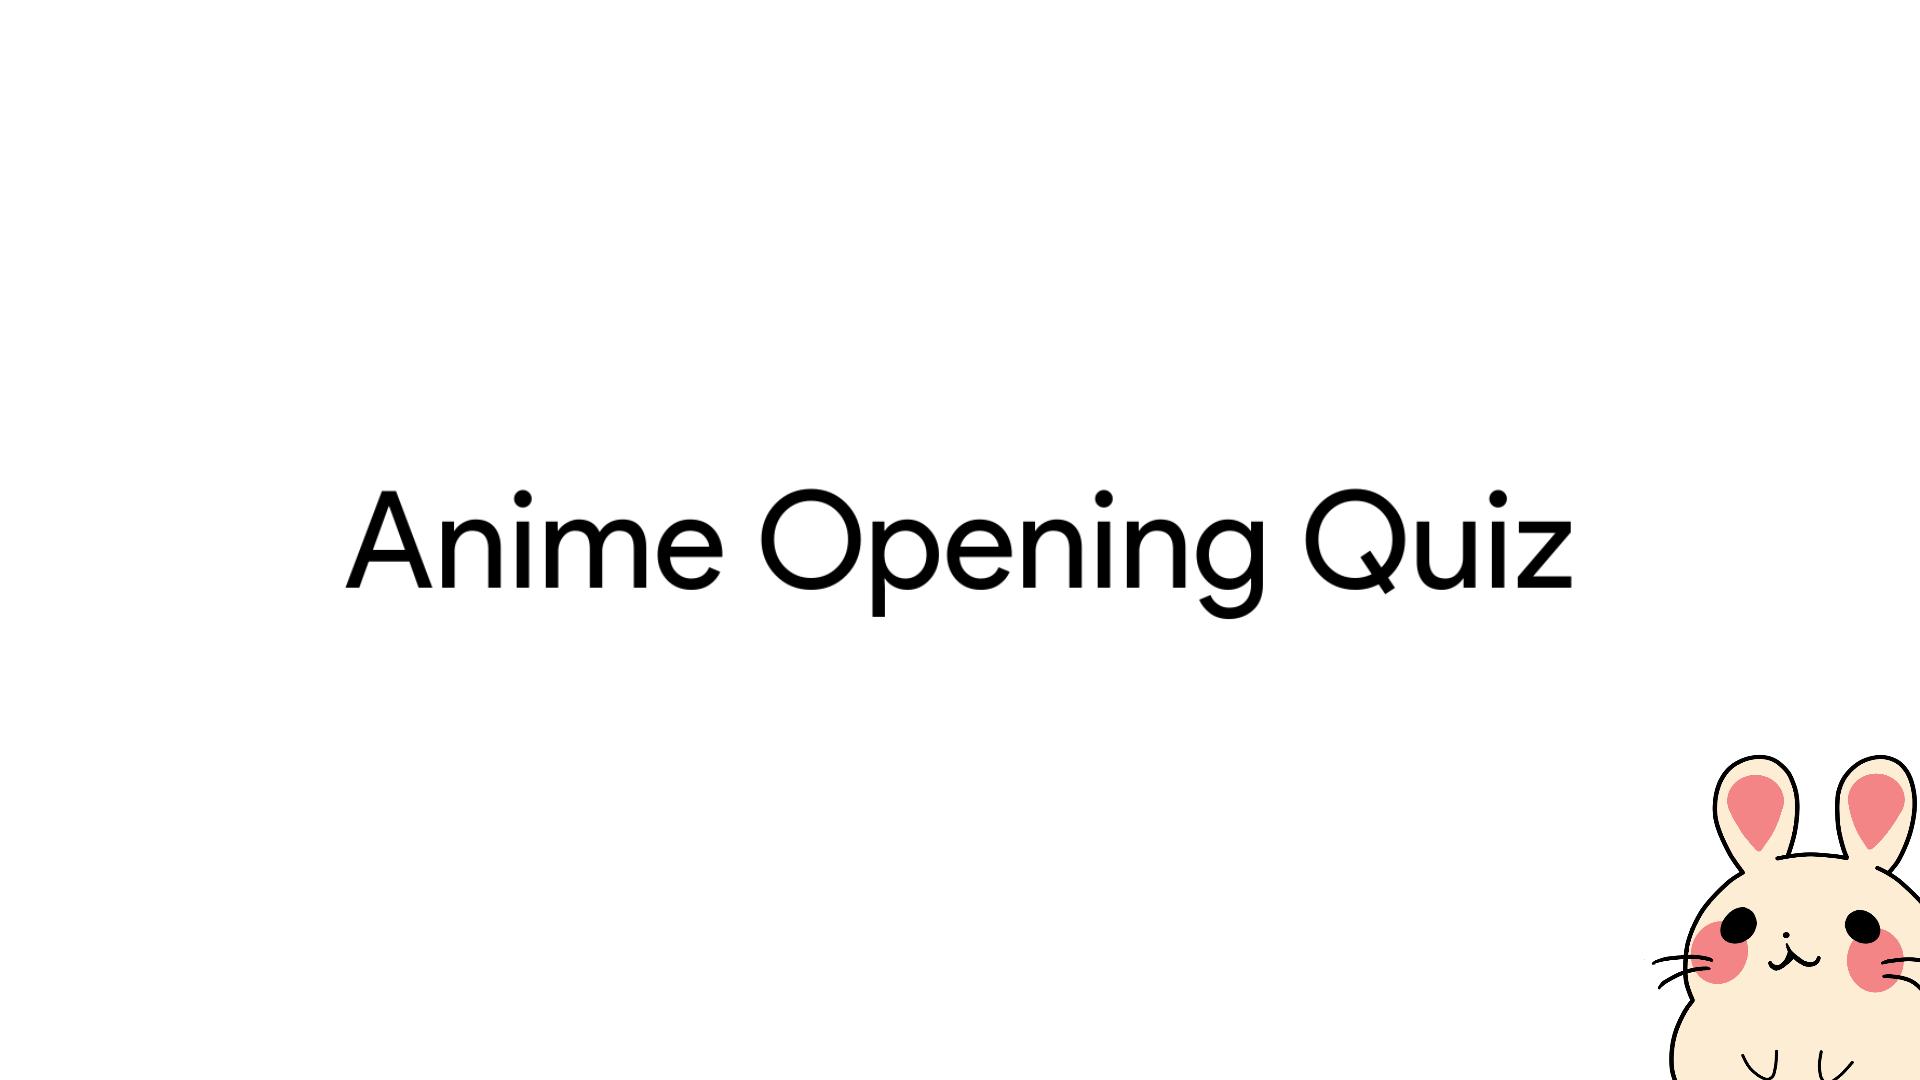 struktur magi Bedrift Anime Opening Quiz for Android - APK Download